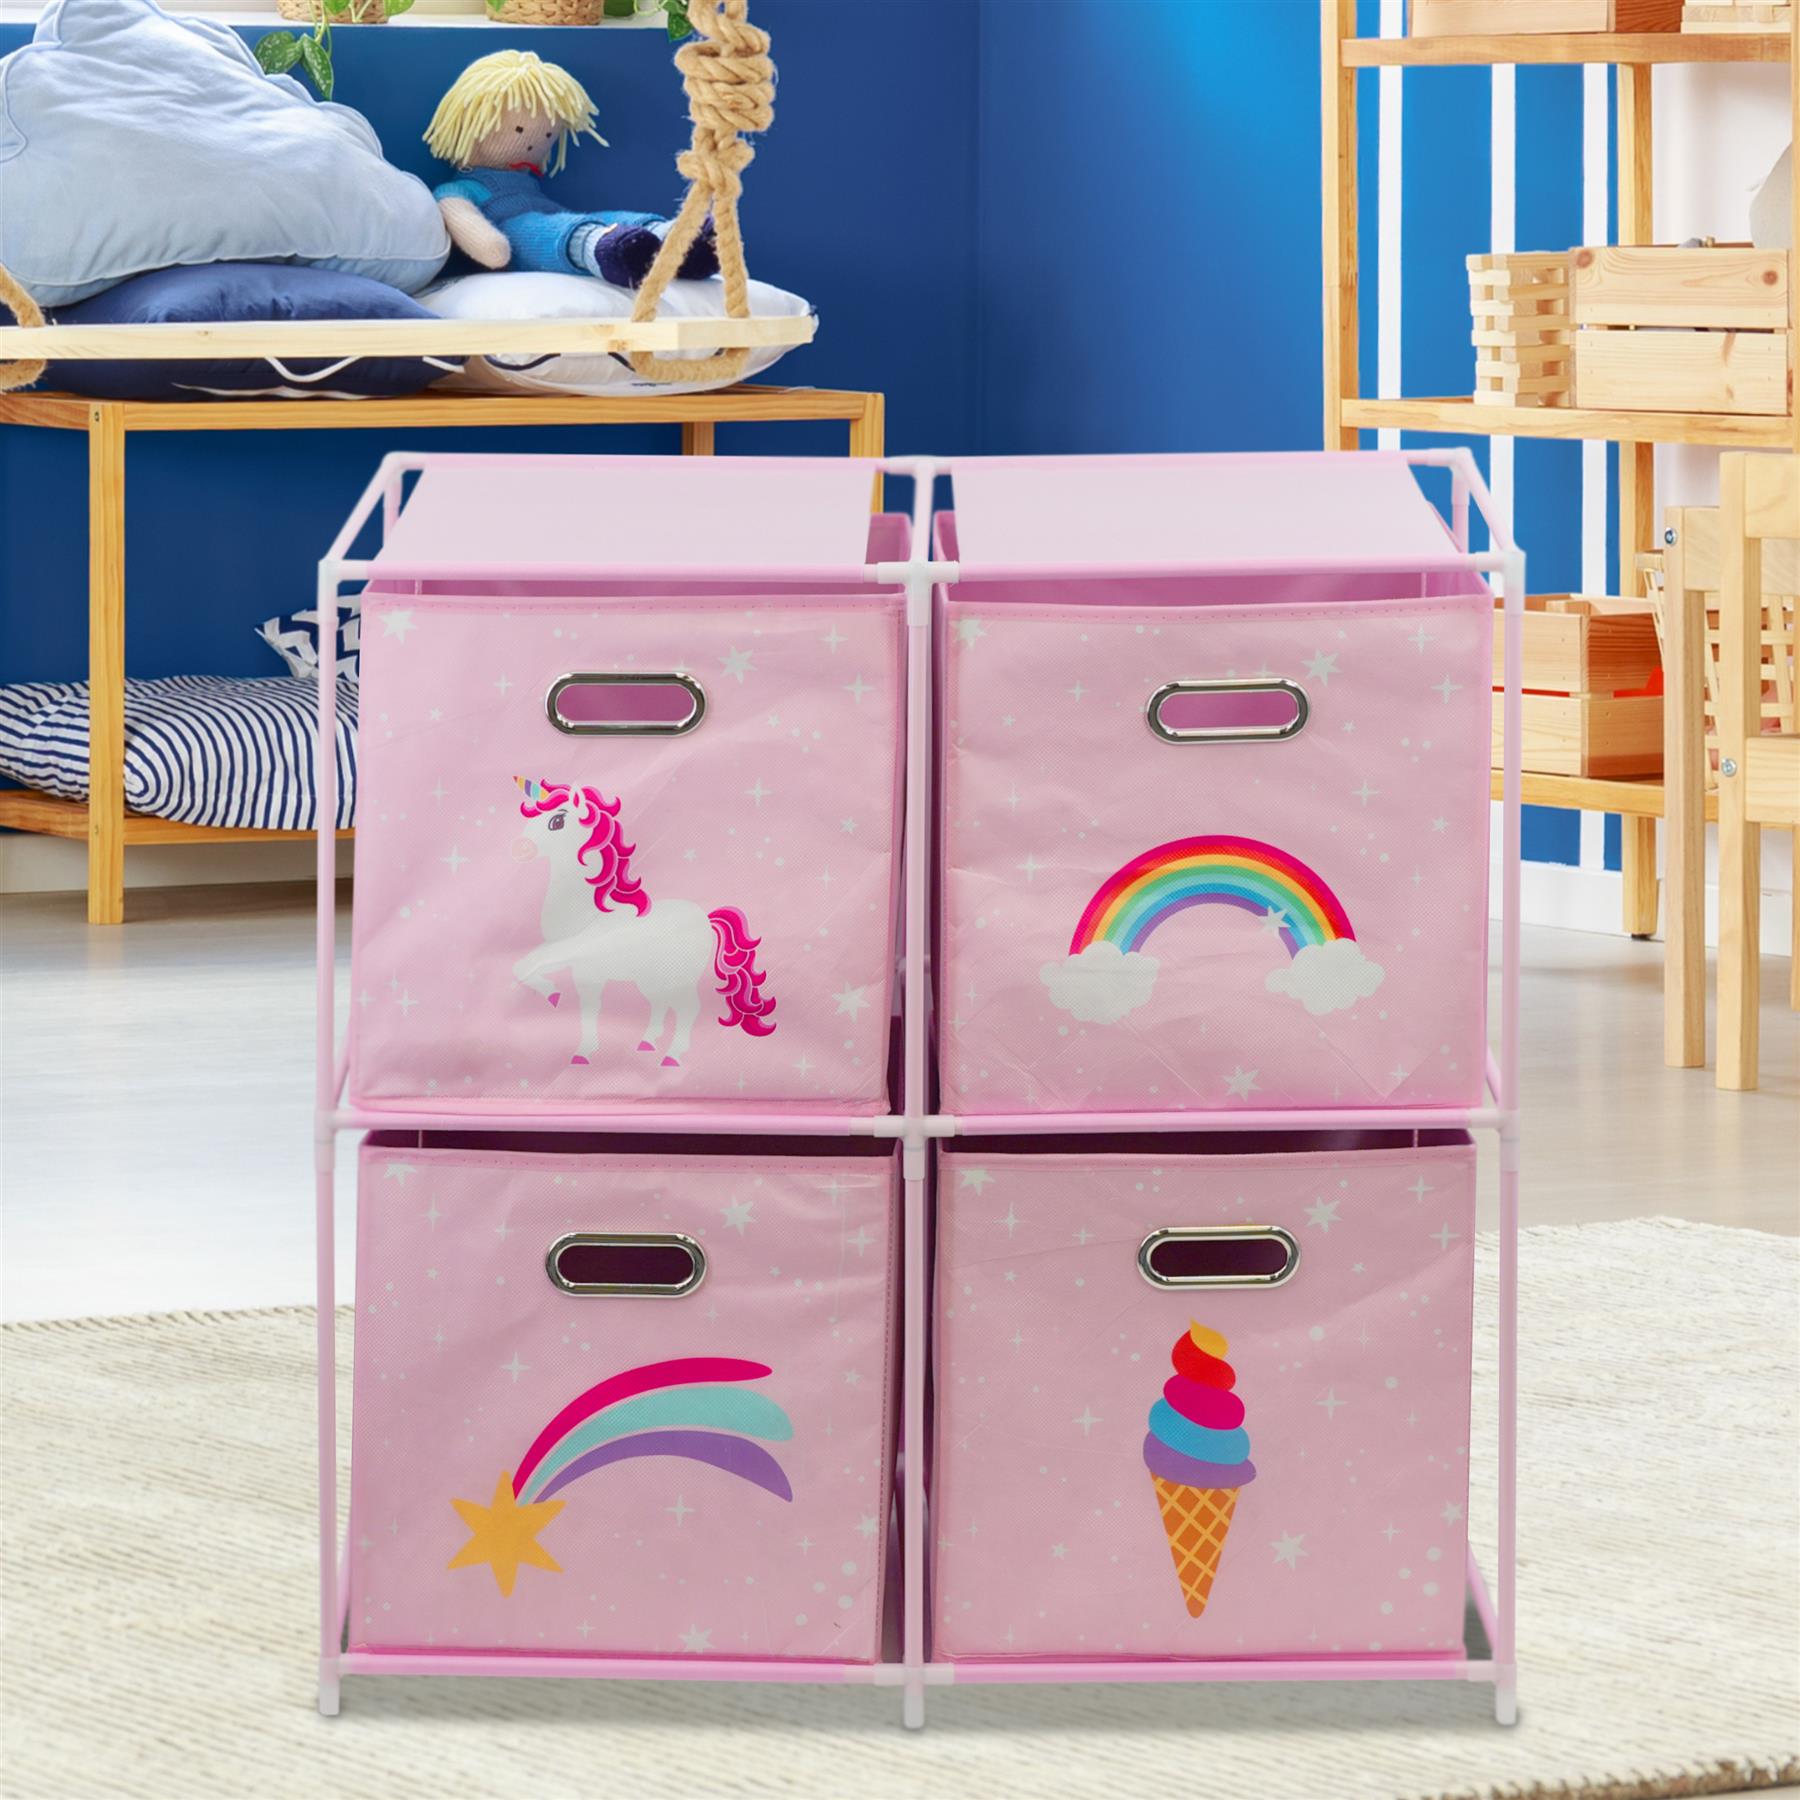 Kids Unicorn Design Storage Cubes by The Magic Toy Shop - The Magic Toy Shop